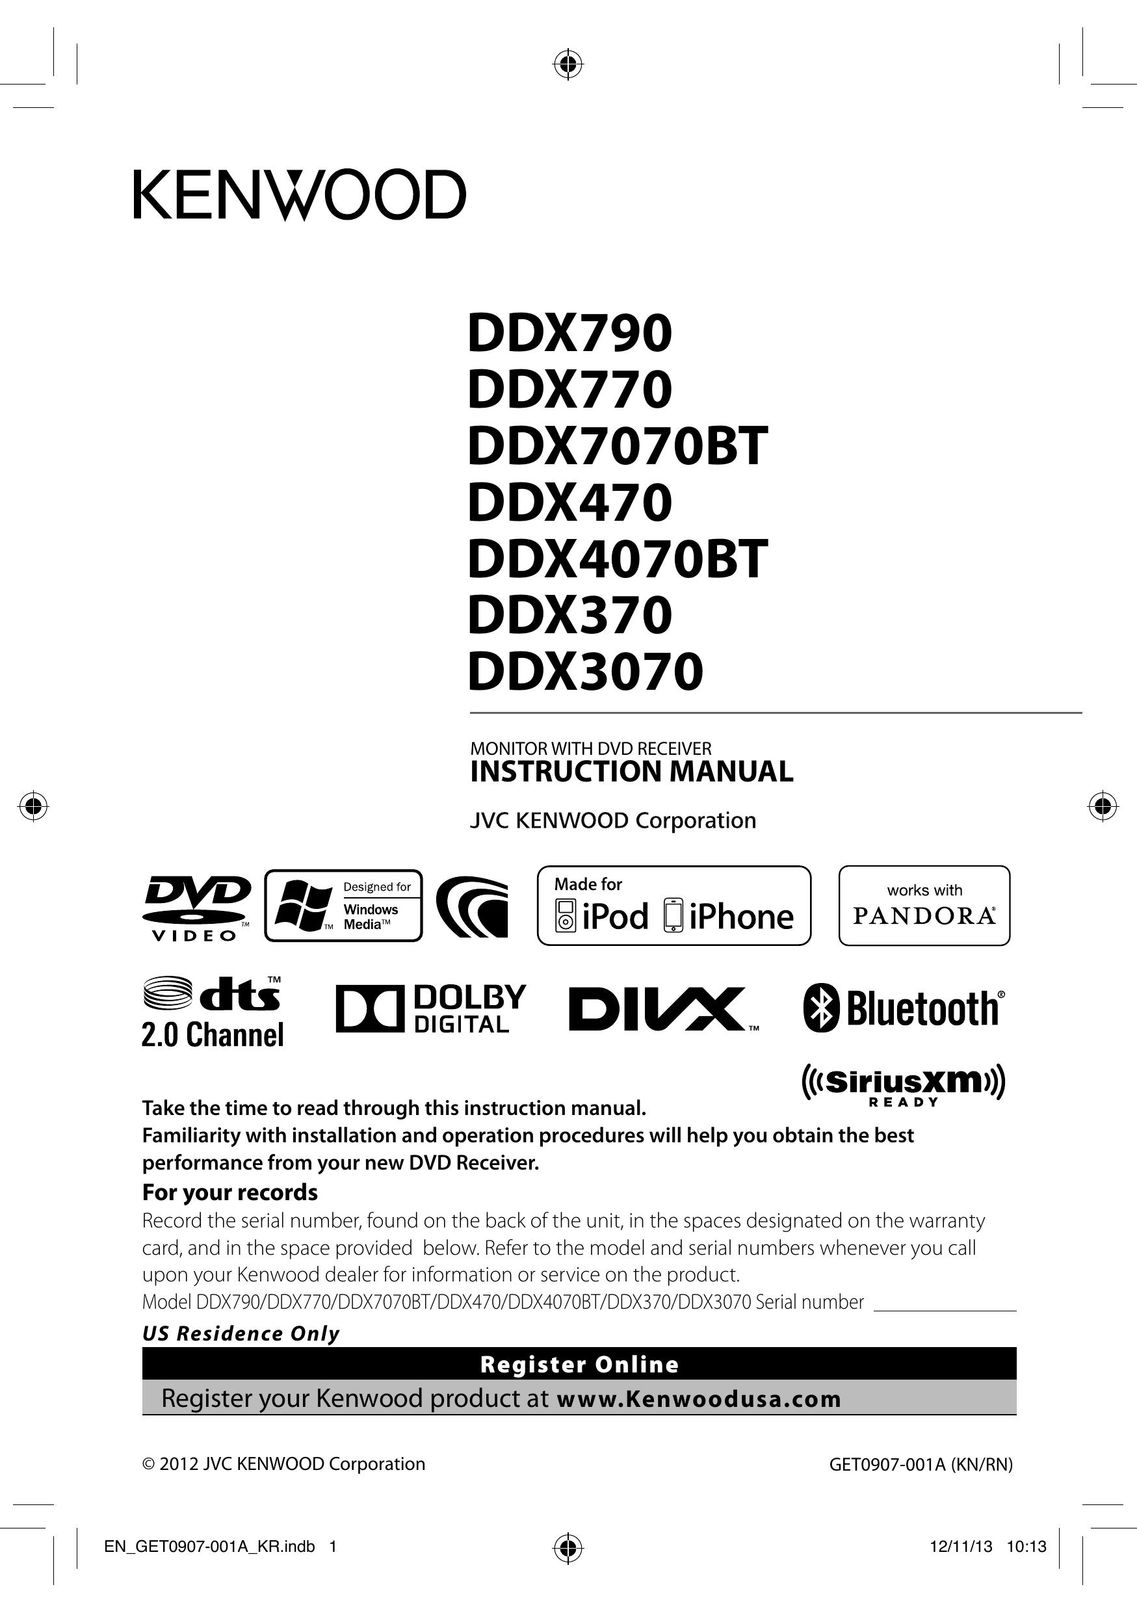 Kenwood DDX370 Computer Monitor User Manual